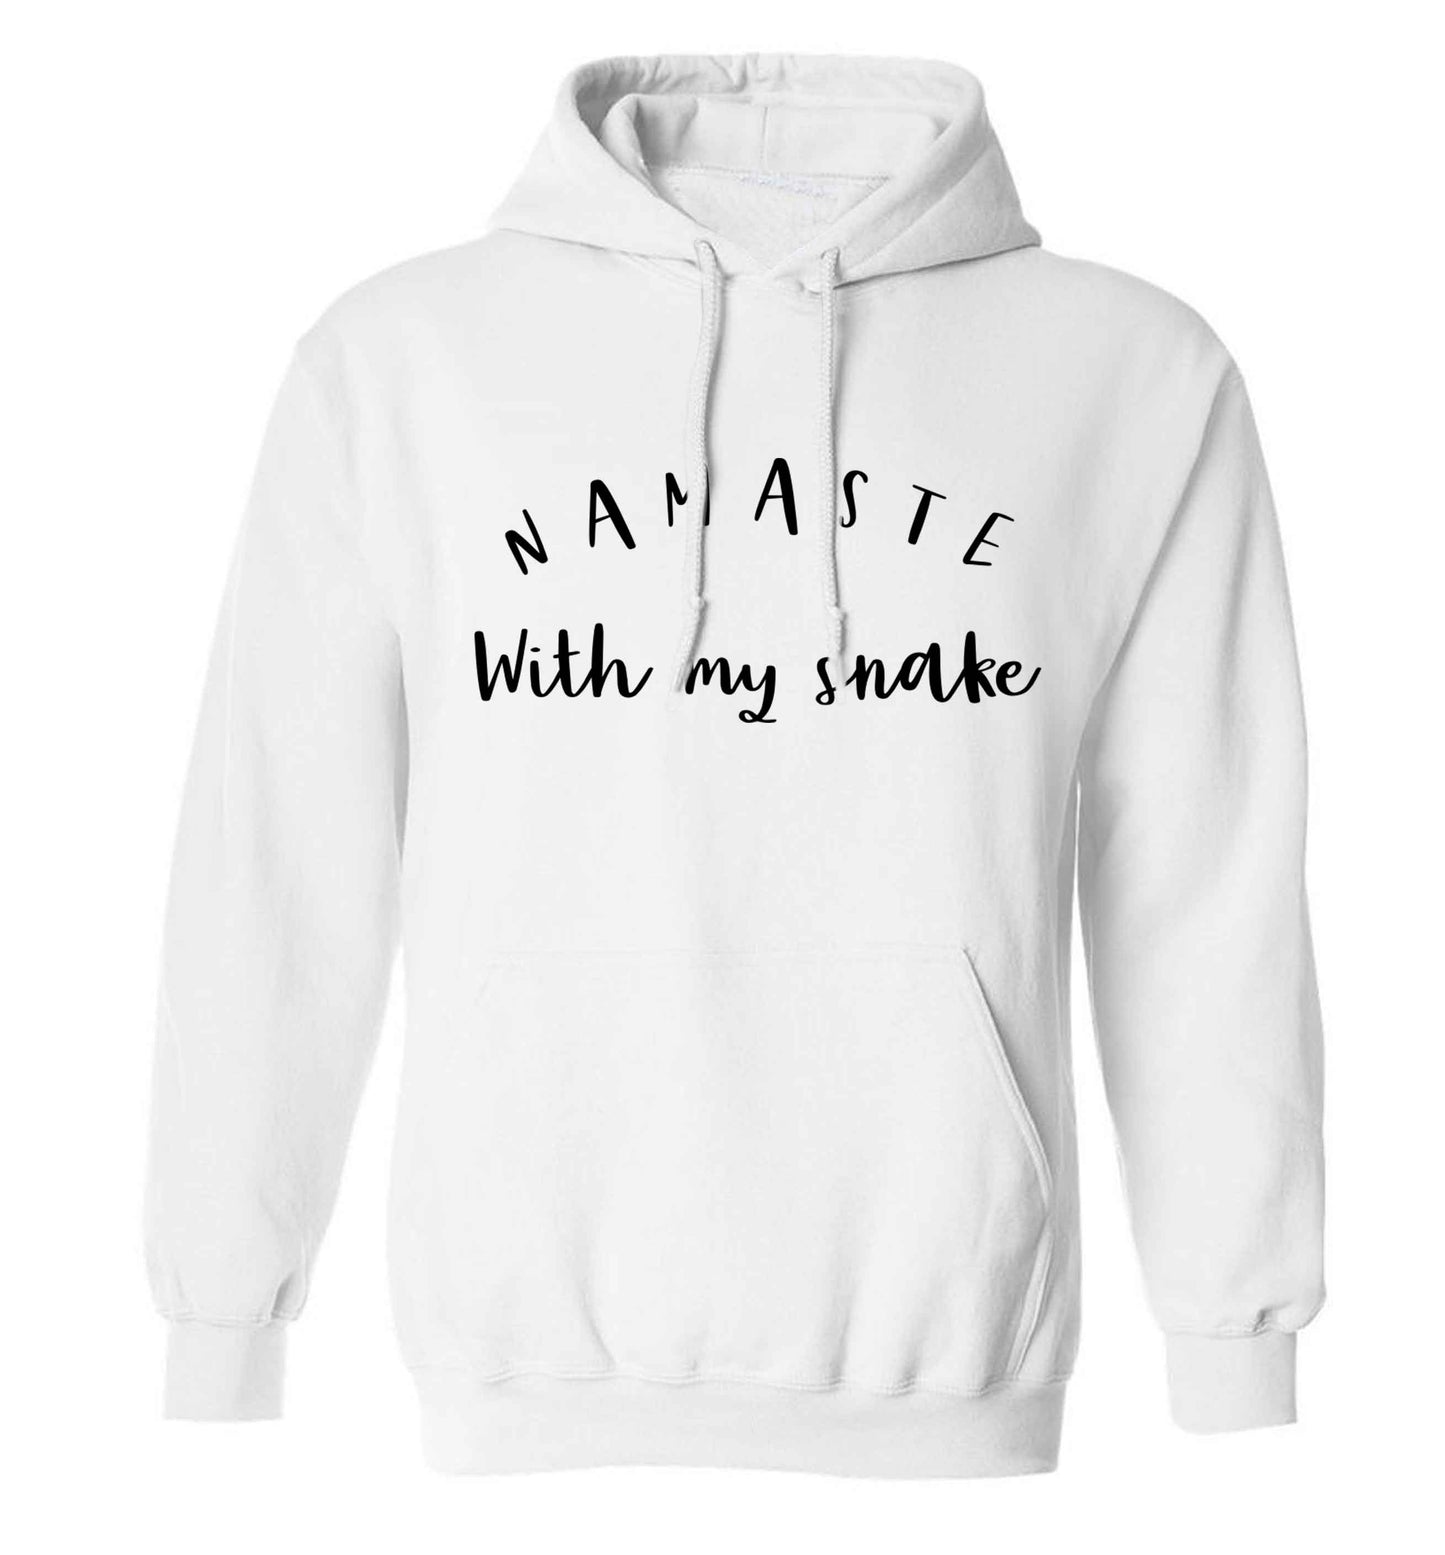 Namaste with my snake adults unisex white hoodie 2XL